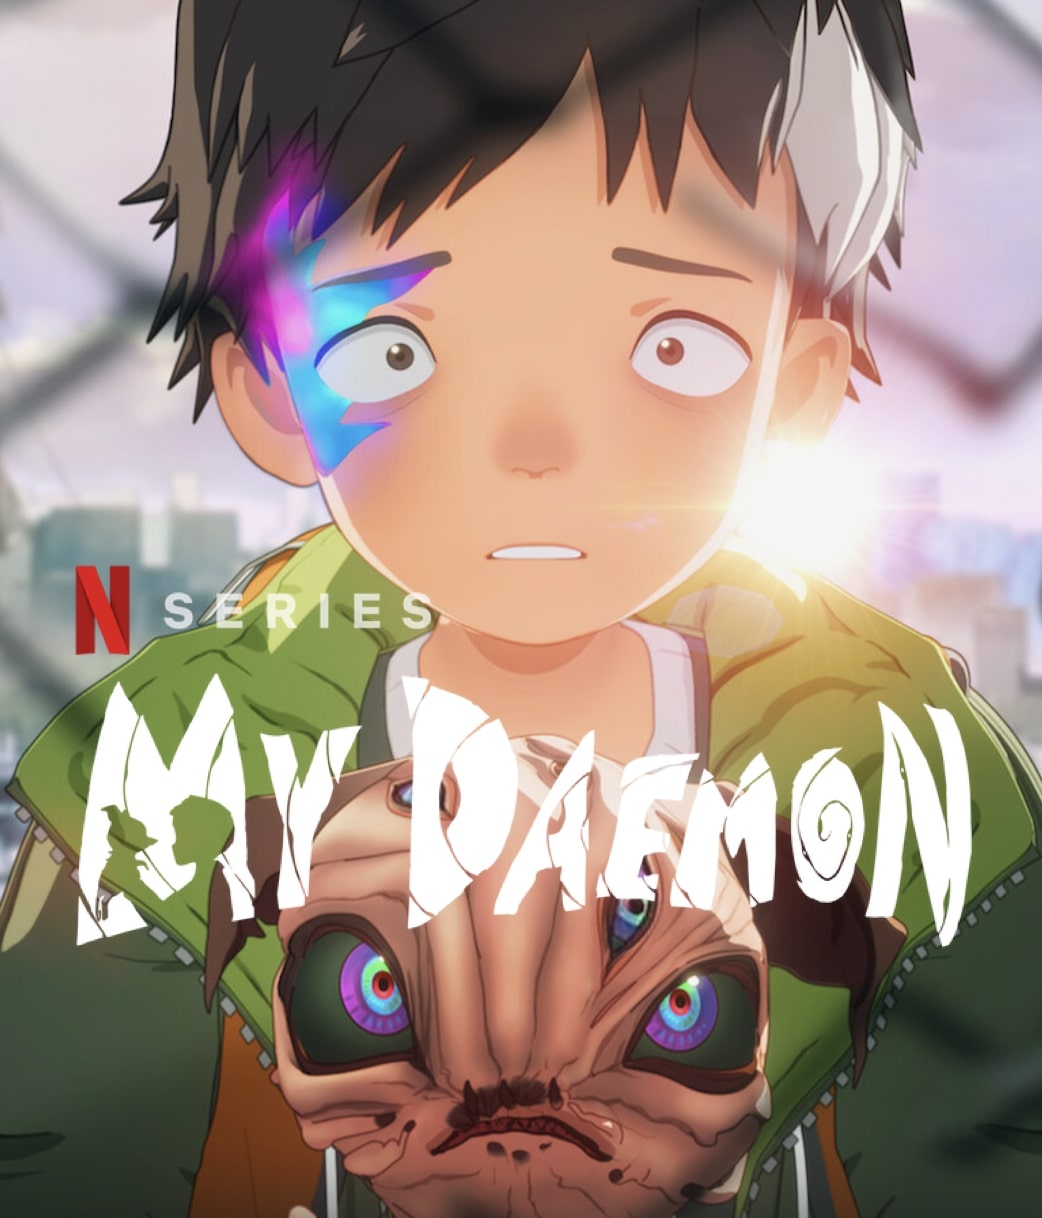 My Daemon (2023) ดีมอนของผม